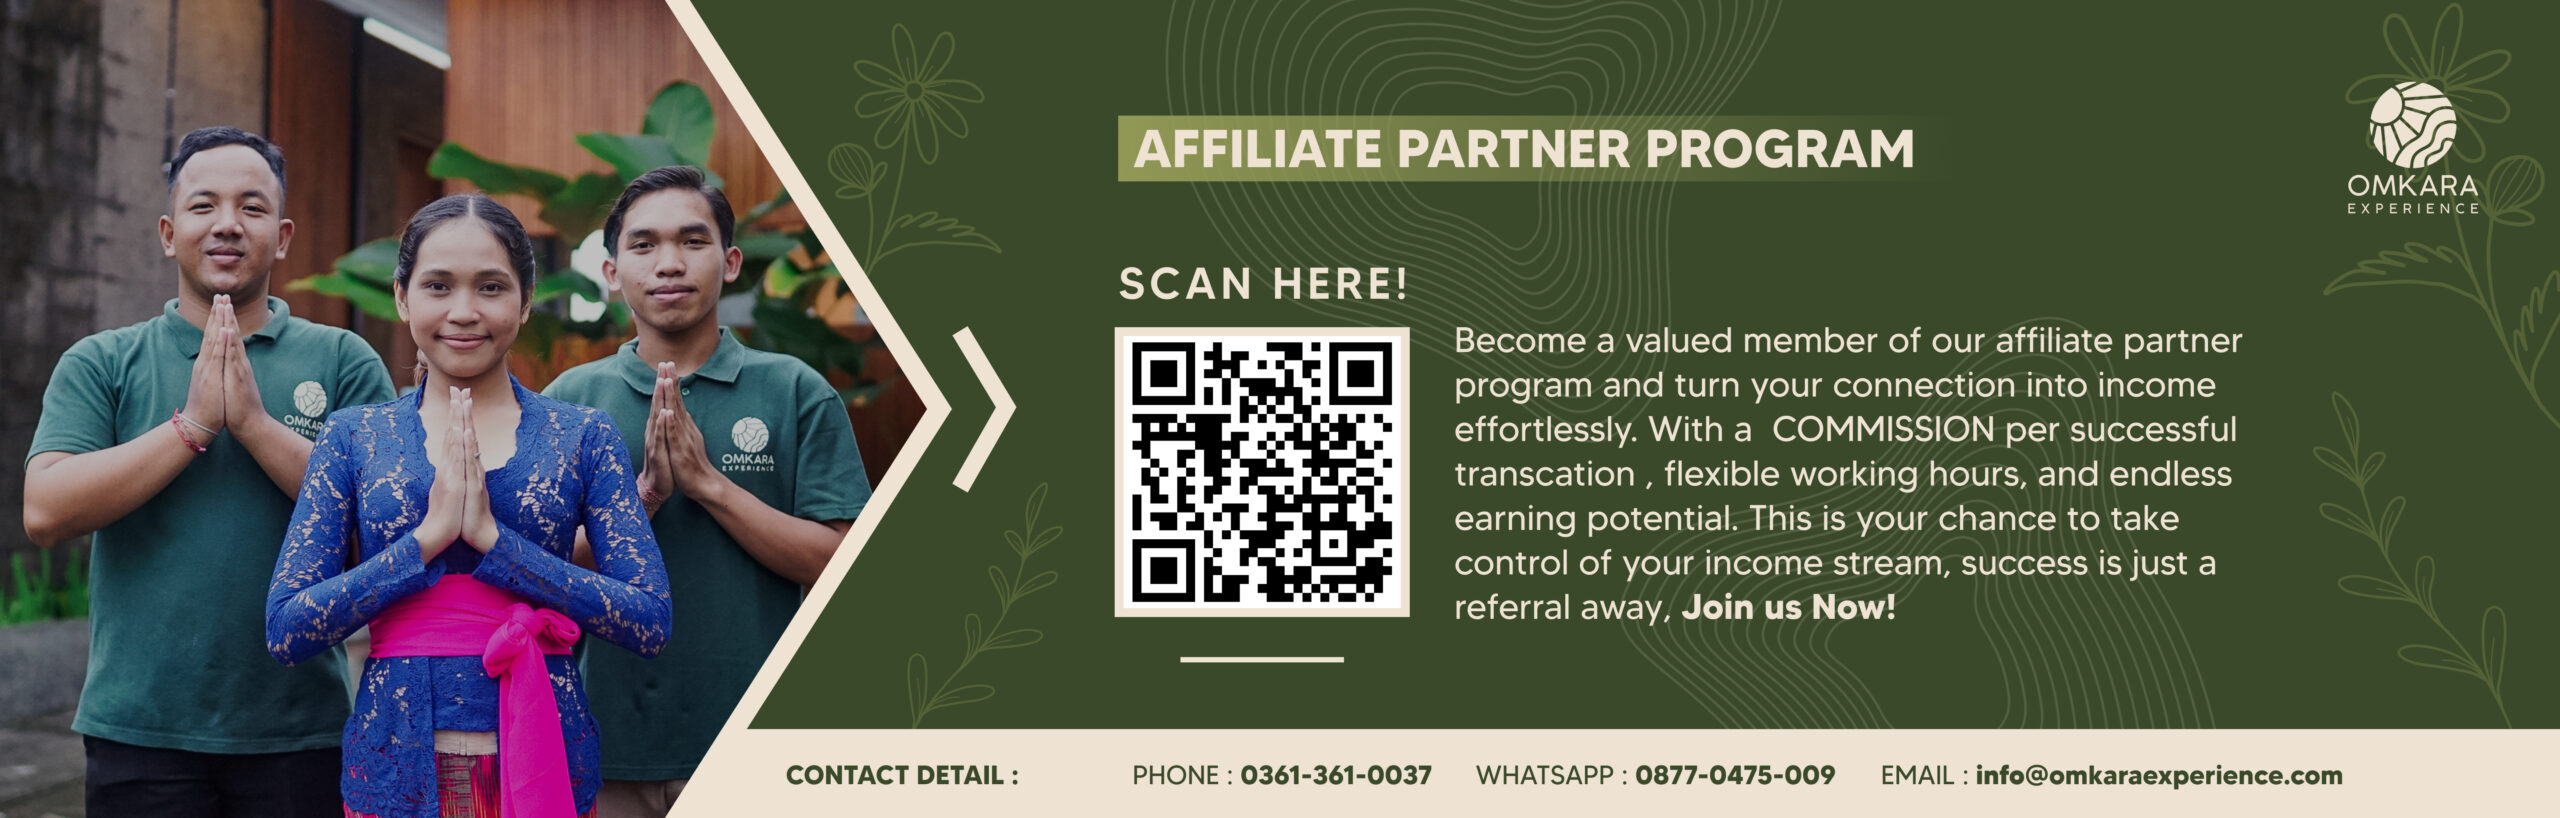 affiliate partner - web banner